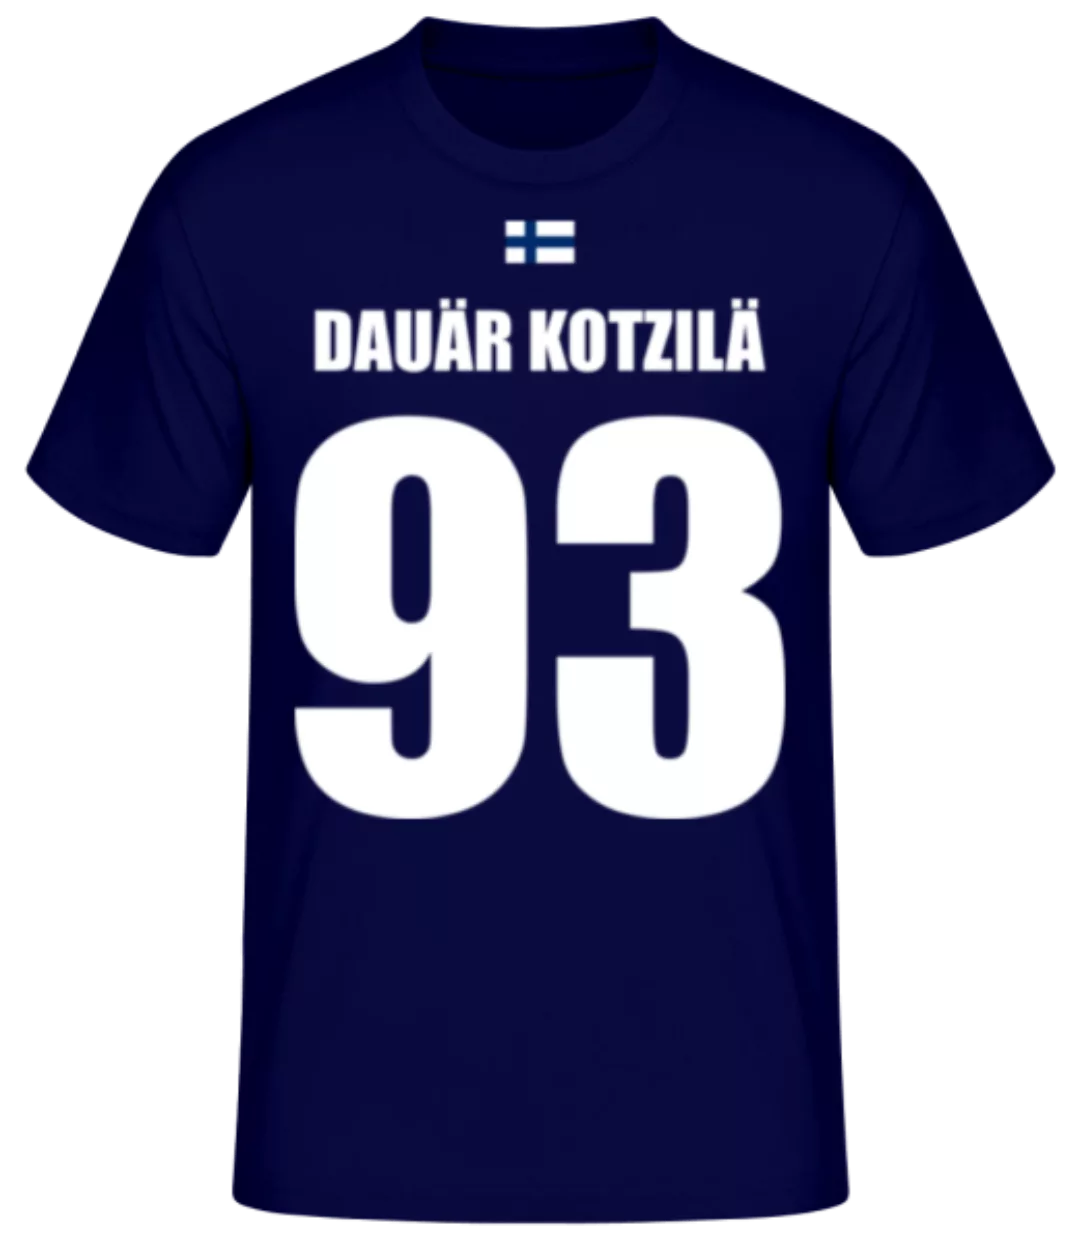 Finnland Fußball Trikot Dauär Kotzilä · Männer Basic T-Shirt günstig online kaufen